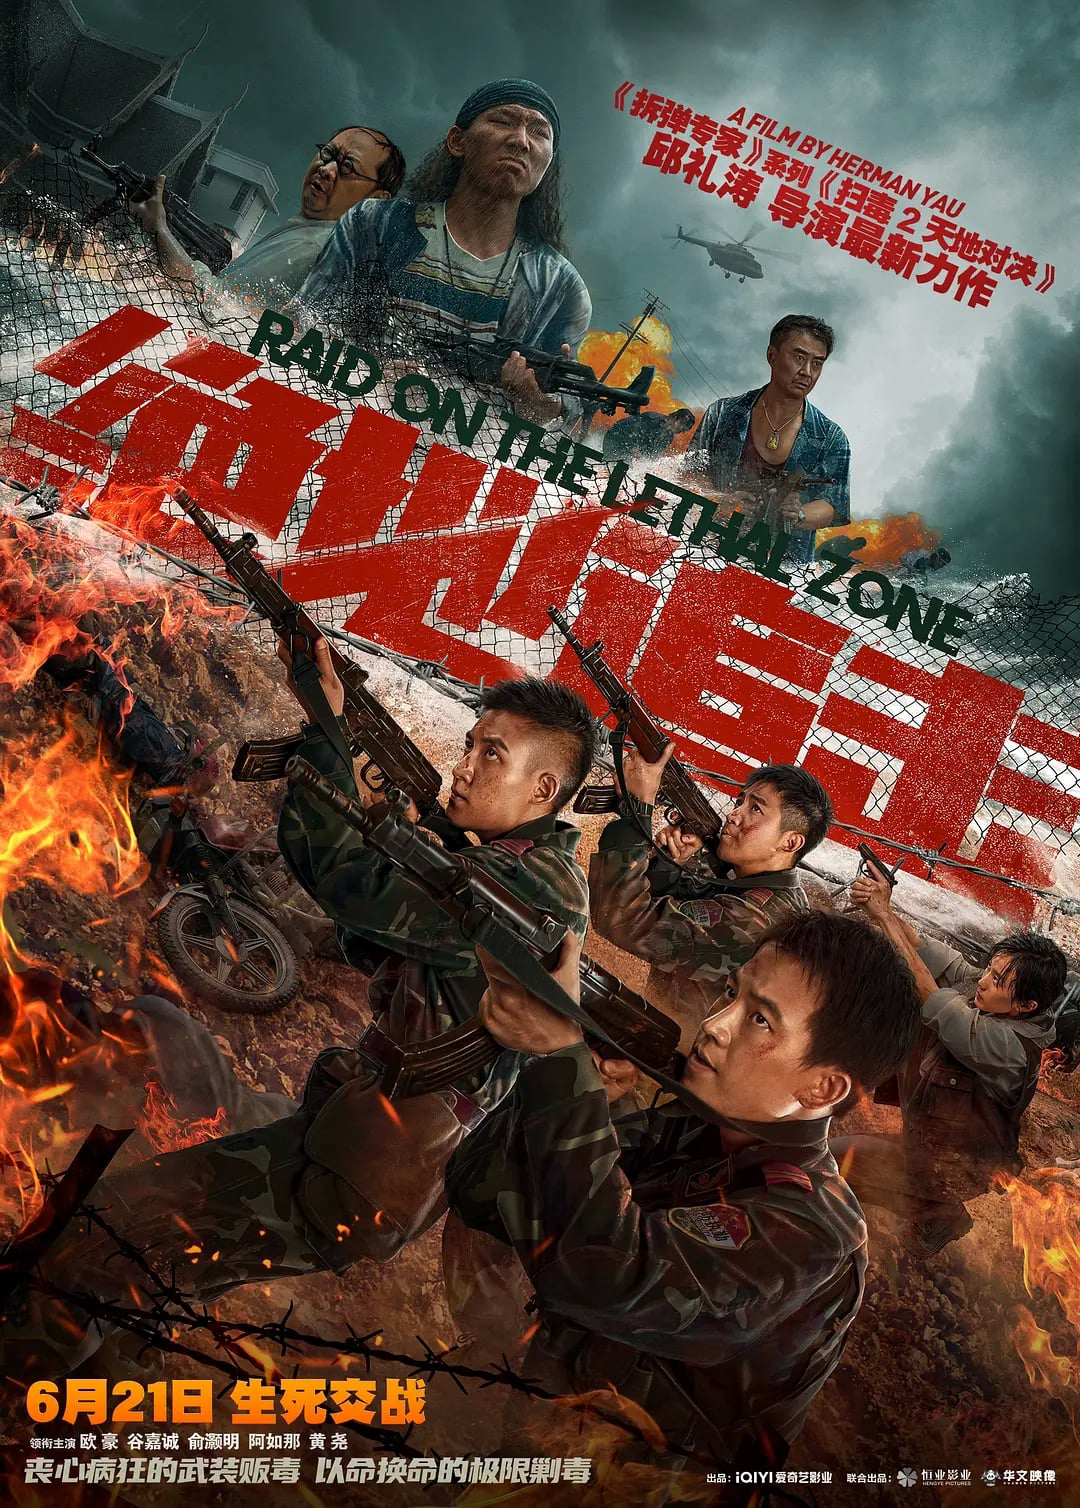 Poster Phim Tuyệt Địa Truy Kích (Raid On The Lethal Zone)